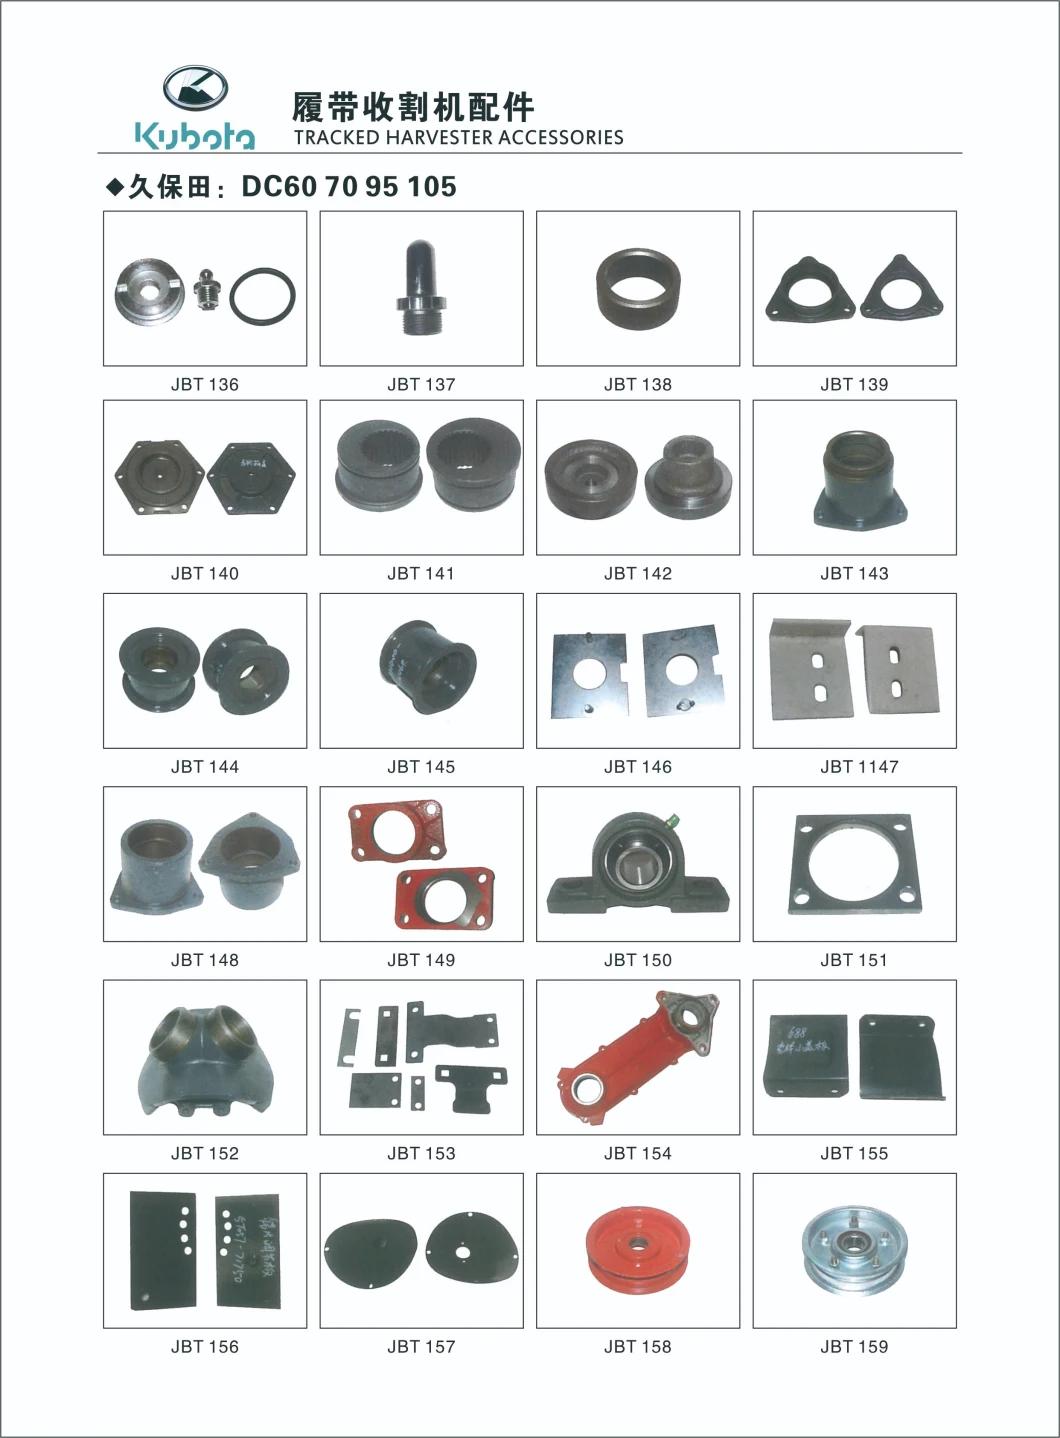 Kubota Harvester Accessories DC105 Guide Wheel 5t124-2389-0